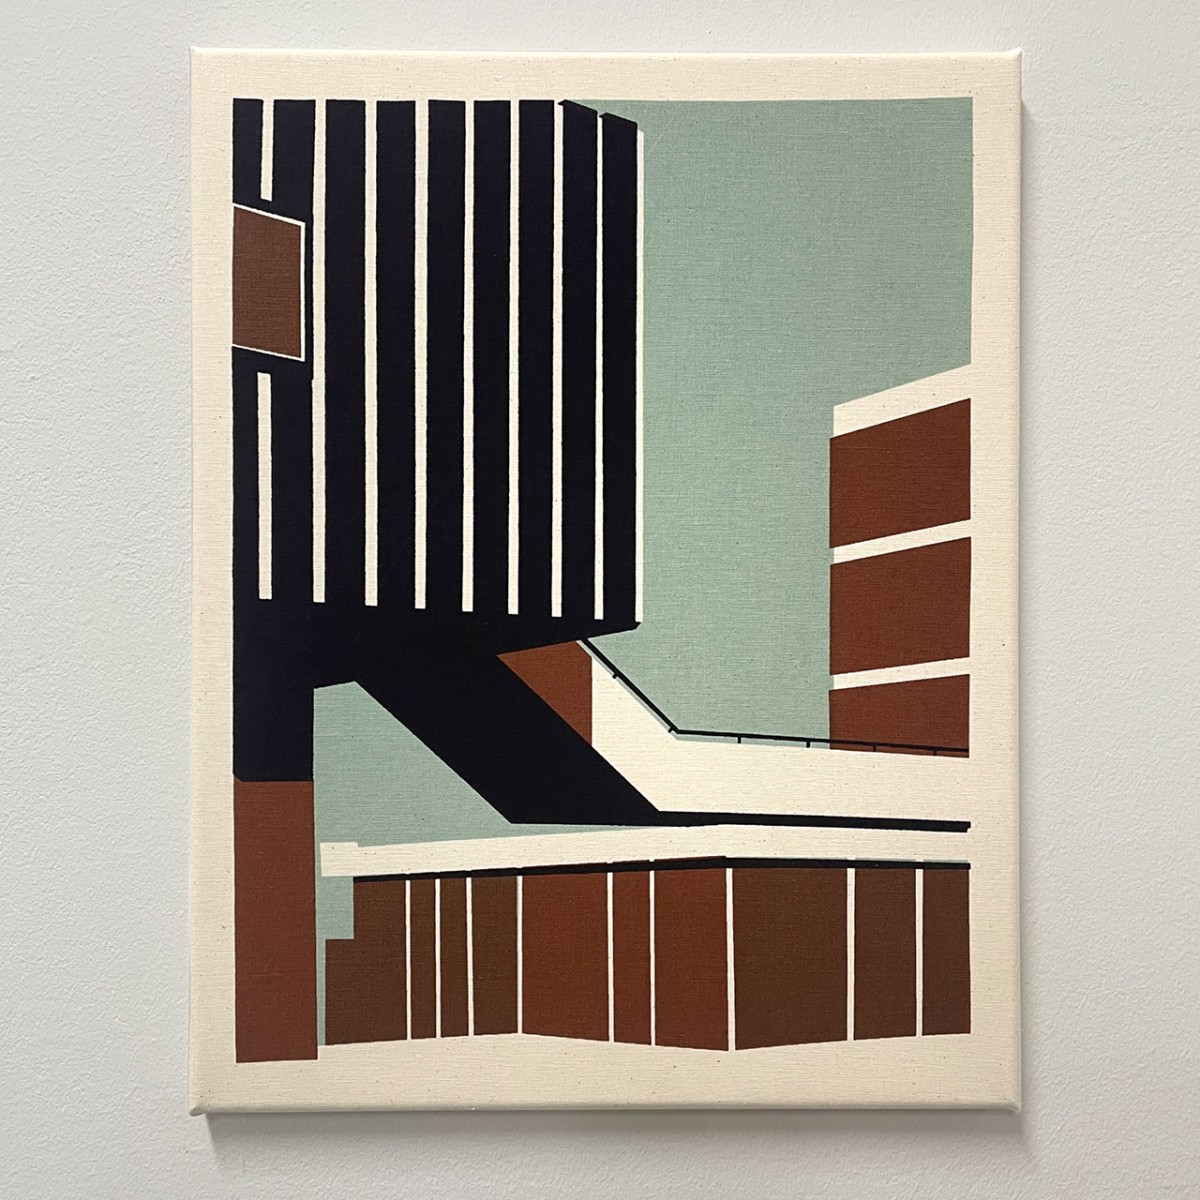 Print now - Riot later ● Abstract Architecture #04, Stoffsiebdruck auf Leinwand